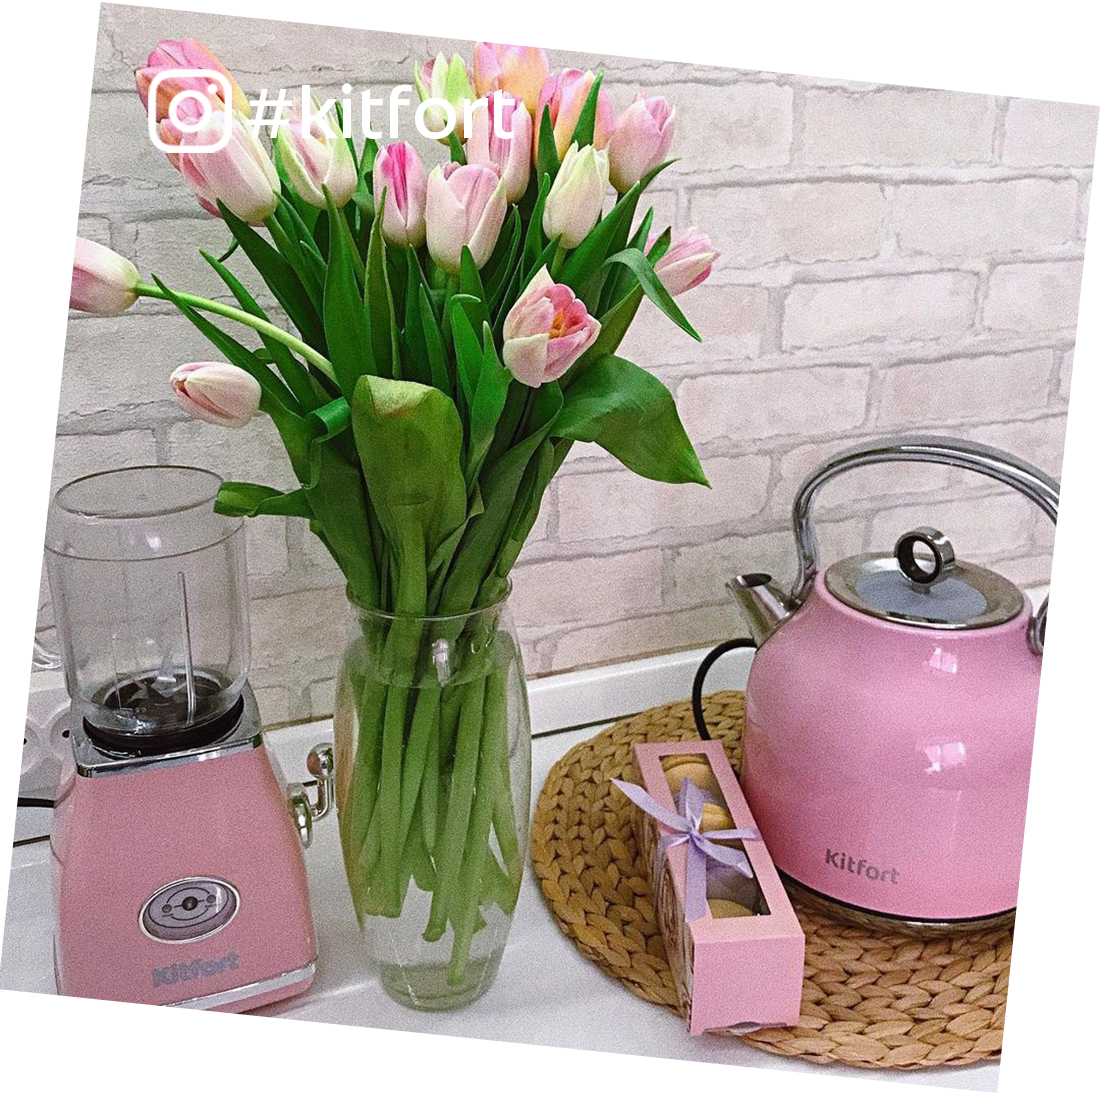 Чайник Kitfort КТ-671-4, розовый